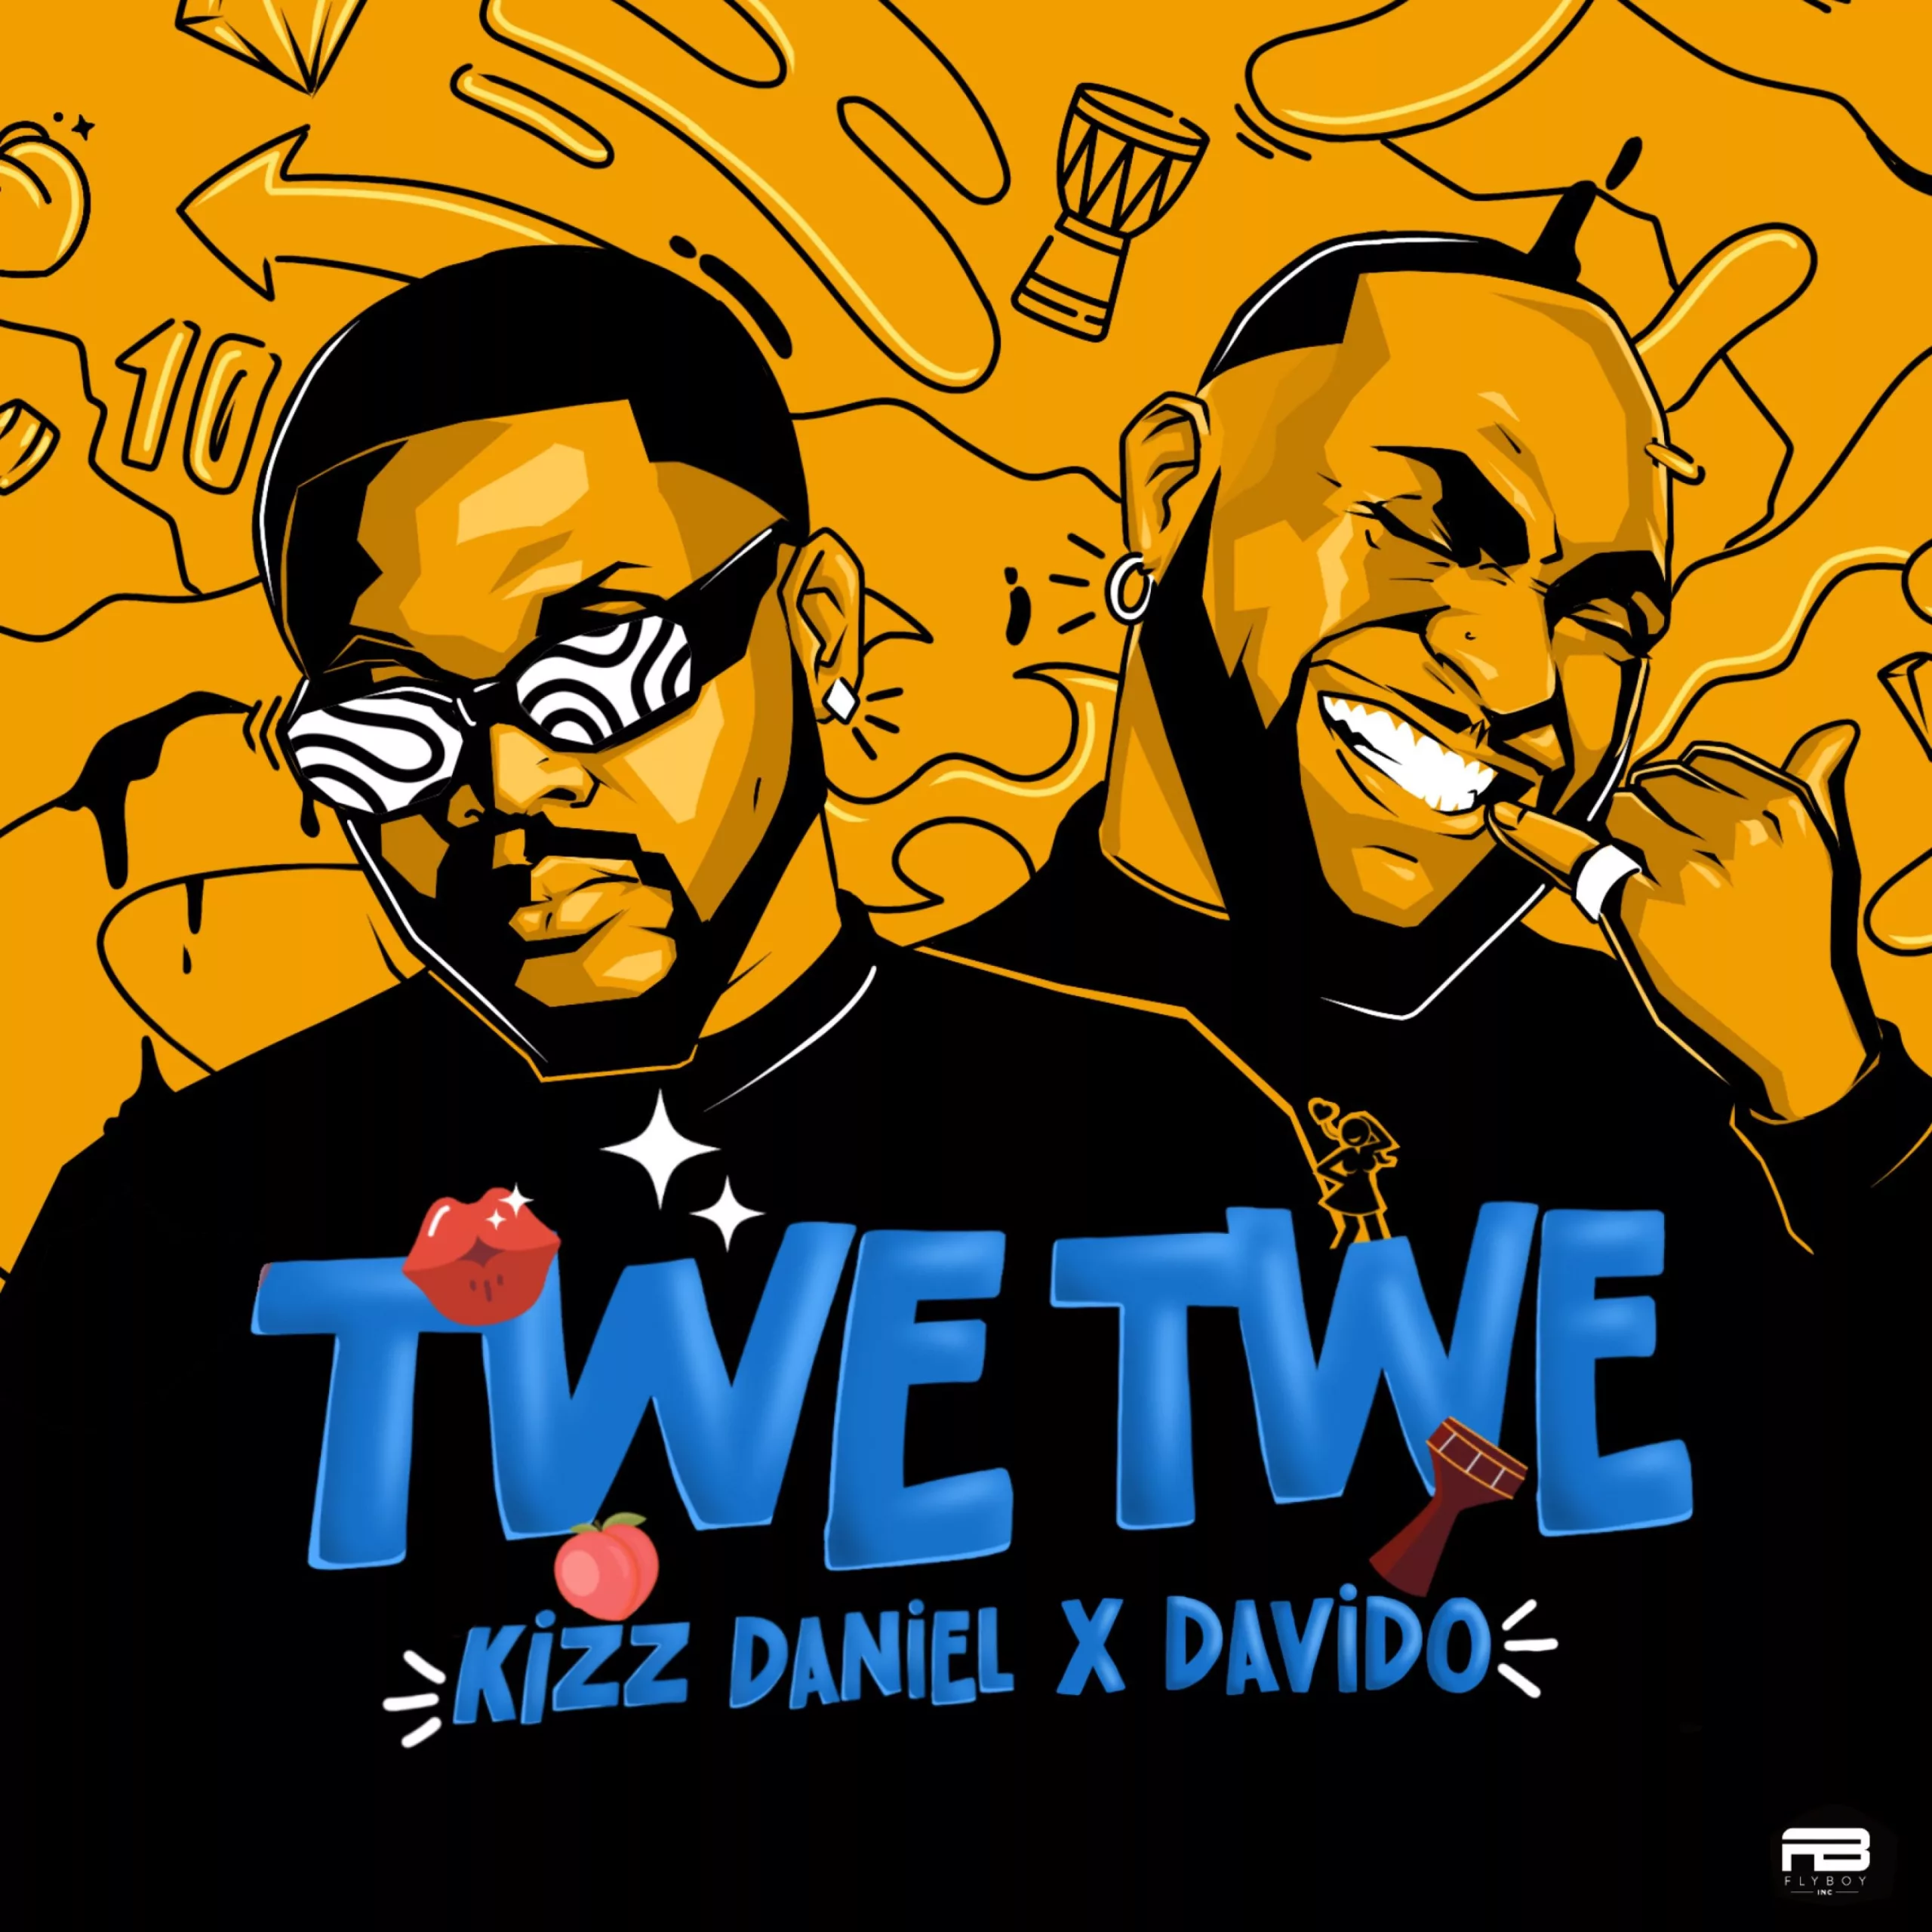 Kizz Daniel & Davido - Twe Twe (Remix)